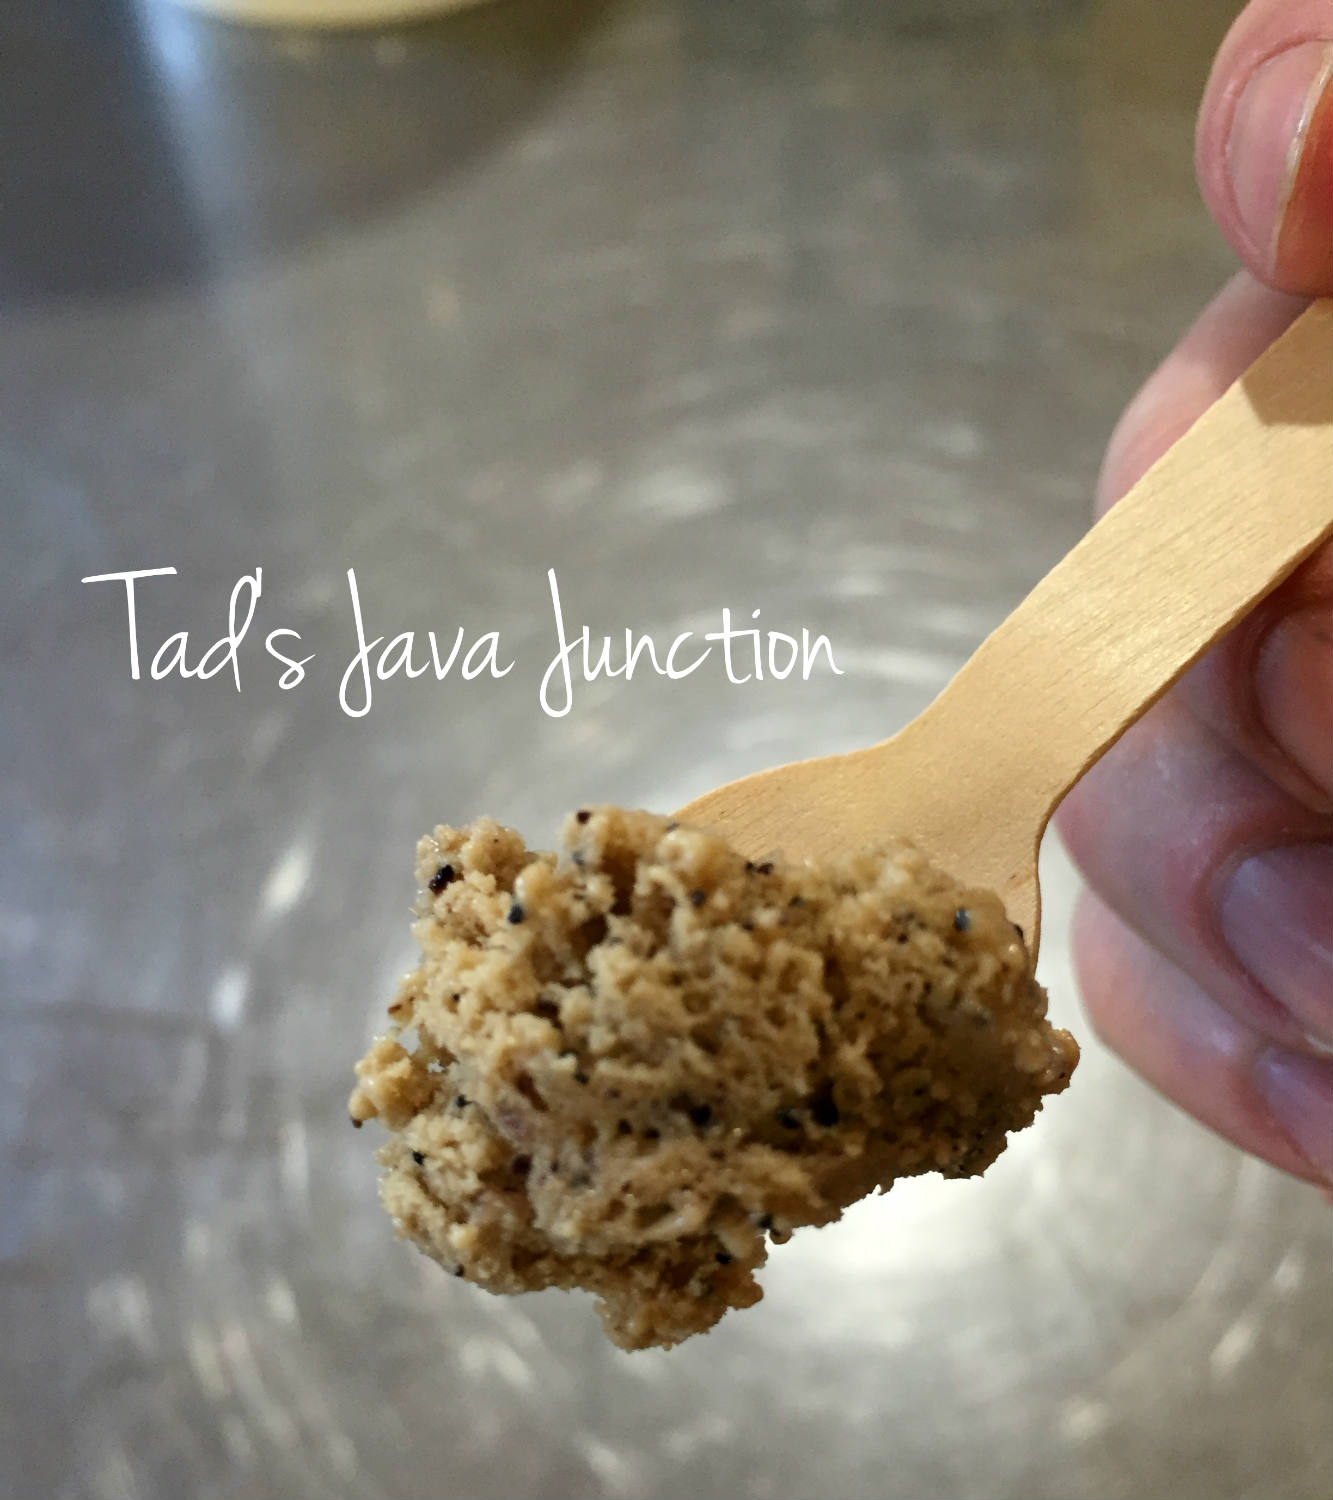 Tad's Java Junction Frozen Custard at Spotted Duck Creamery in Penn Yan, New York